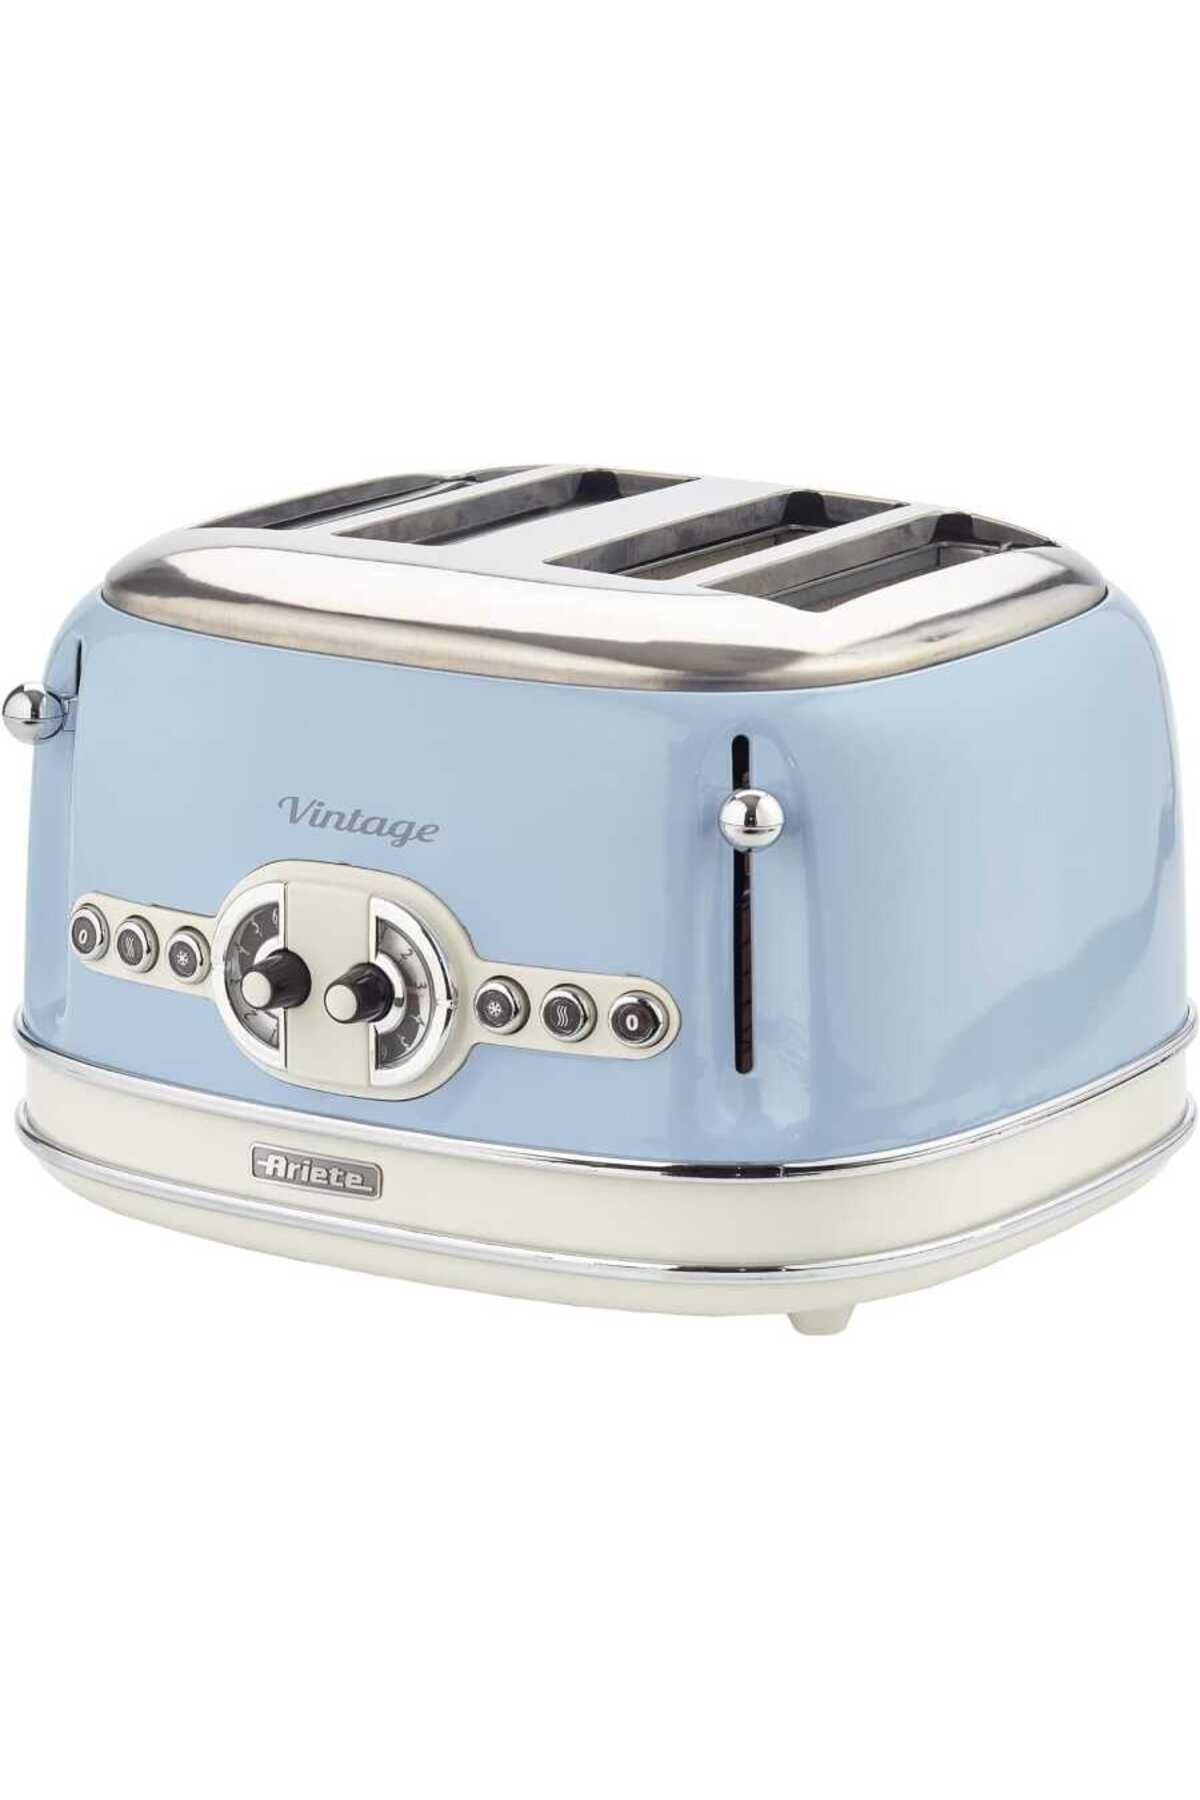 ARİETE Vintage Ekmek Kızartma Makinesi - 4 Dilim Mavi